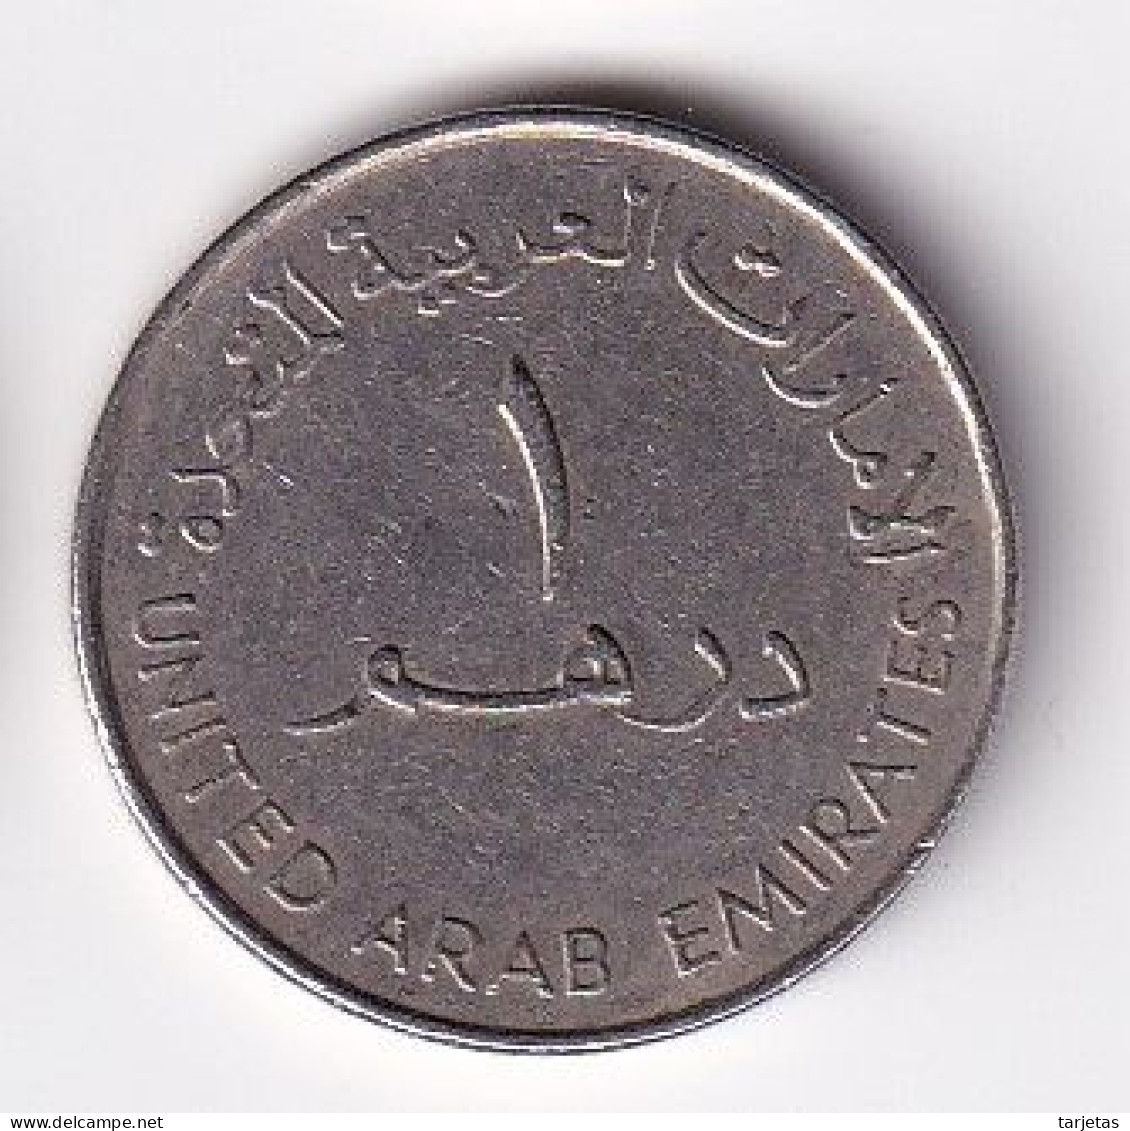 MONEDA DE EMIRATOS ARABES DE 1 DIRHAM DEL AÑO 1998 - 35 ANIV. BANK OF DUBAI (COIN) - Emiratos Arabes